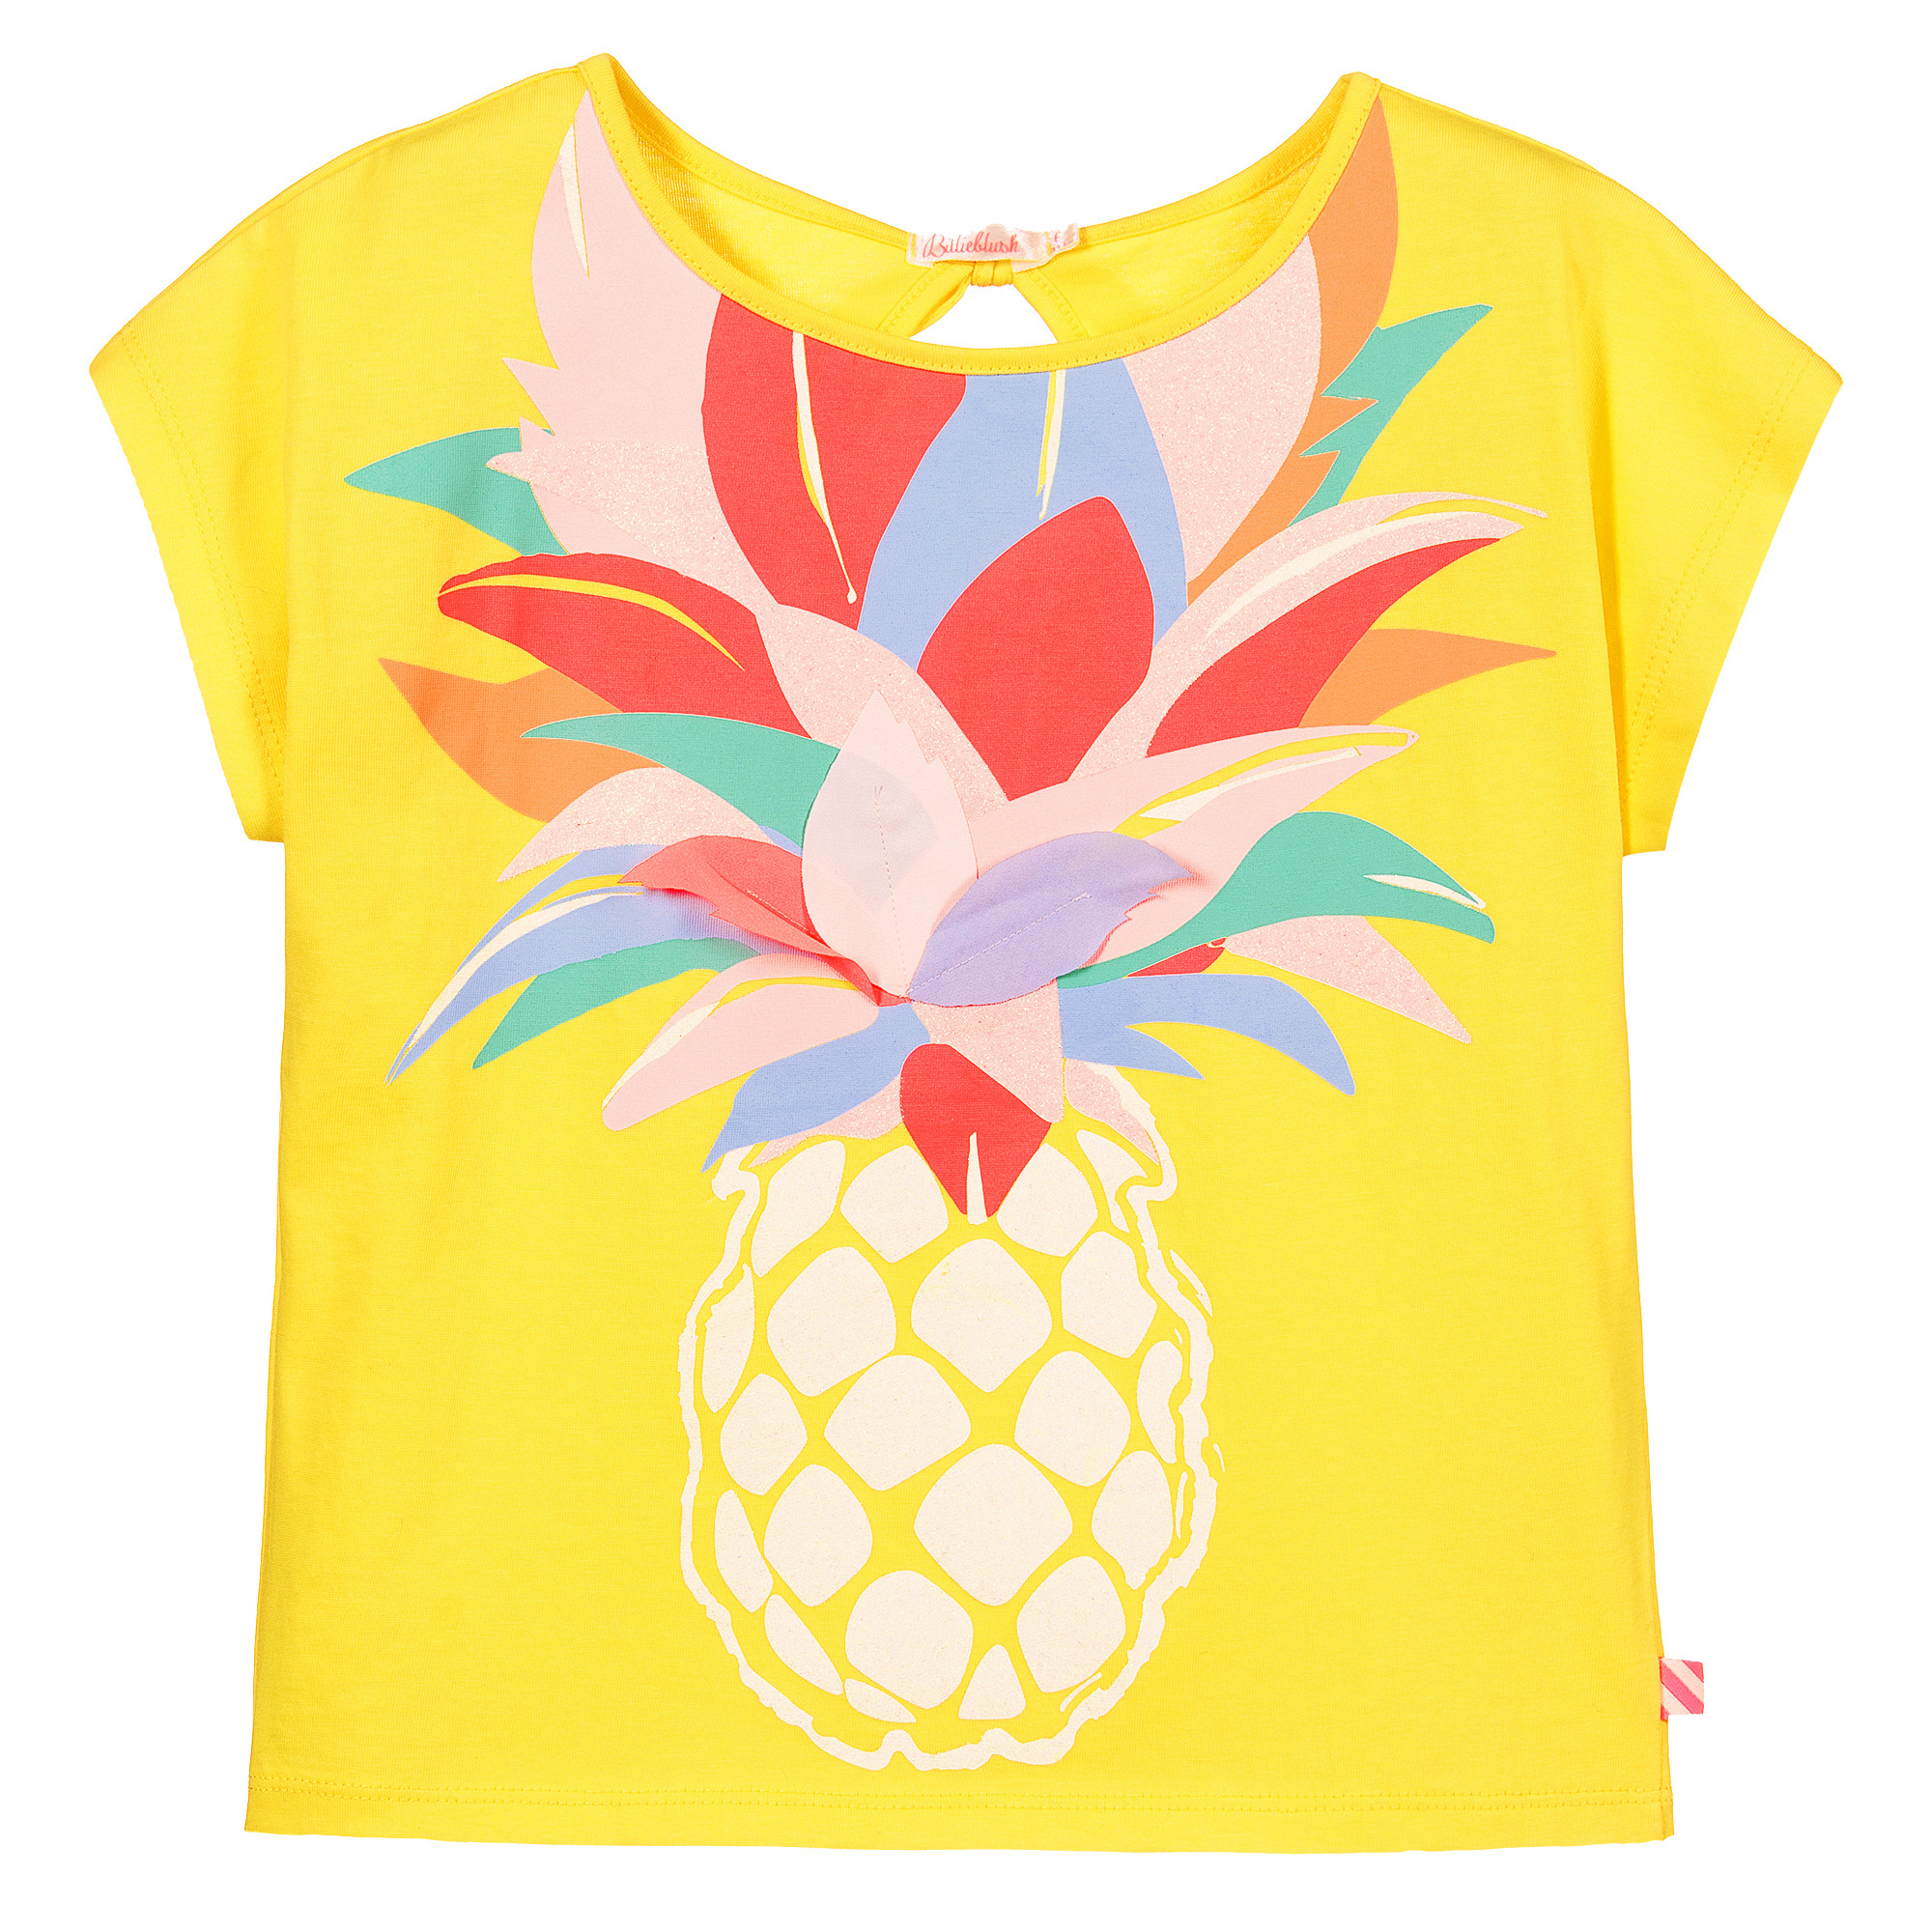 pineapple shirts girls